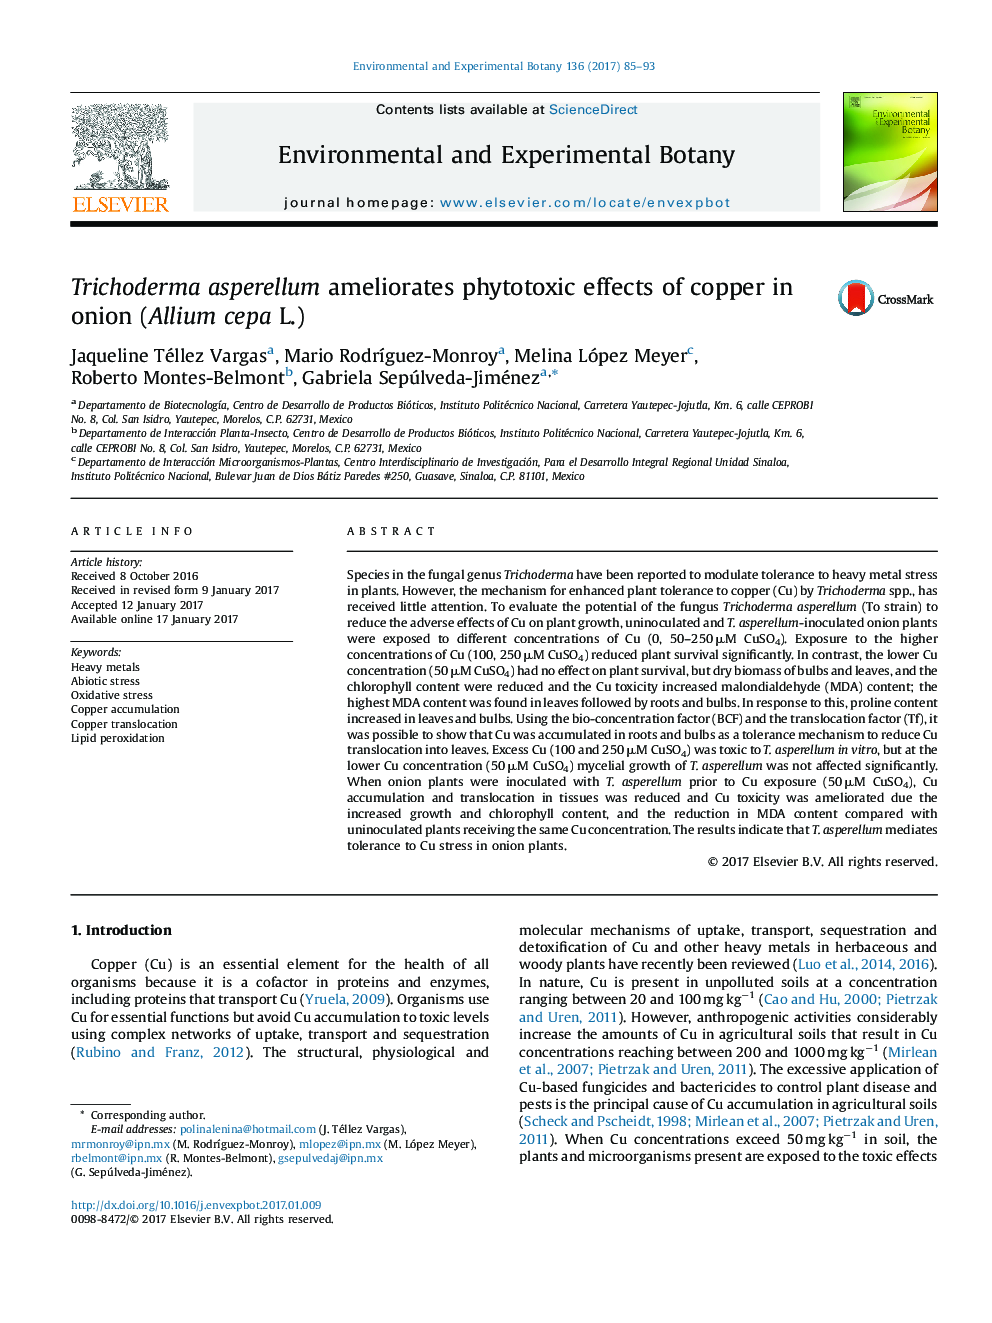 Trichoderma asperellum ameliorates phytotoxic effects of copper in onion (Allium cepa L.)